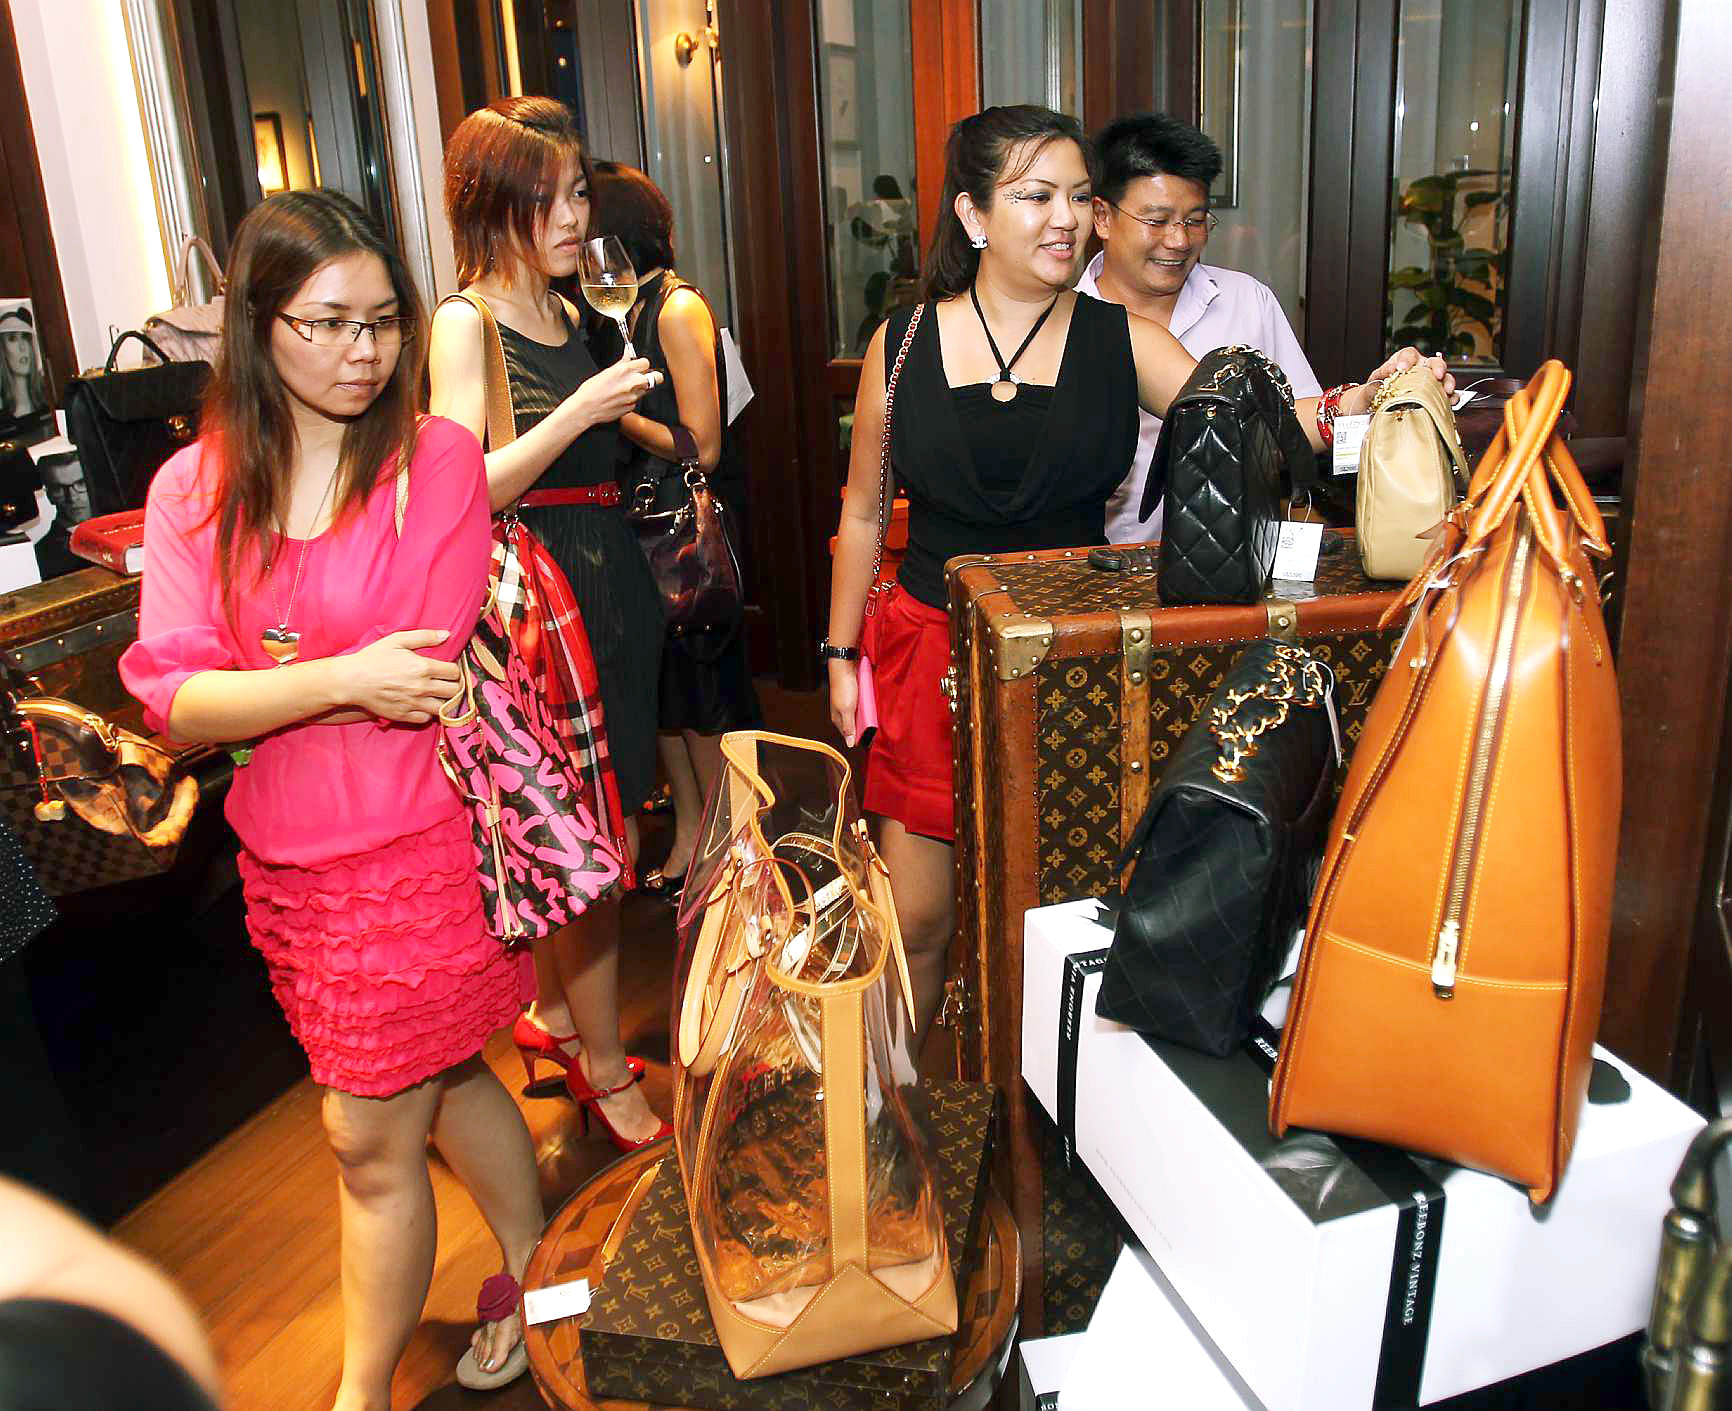 Crocodile-skin handbag sells for a record $222,912